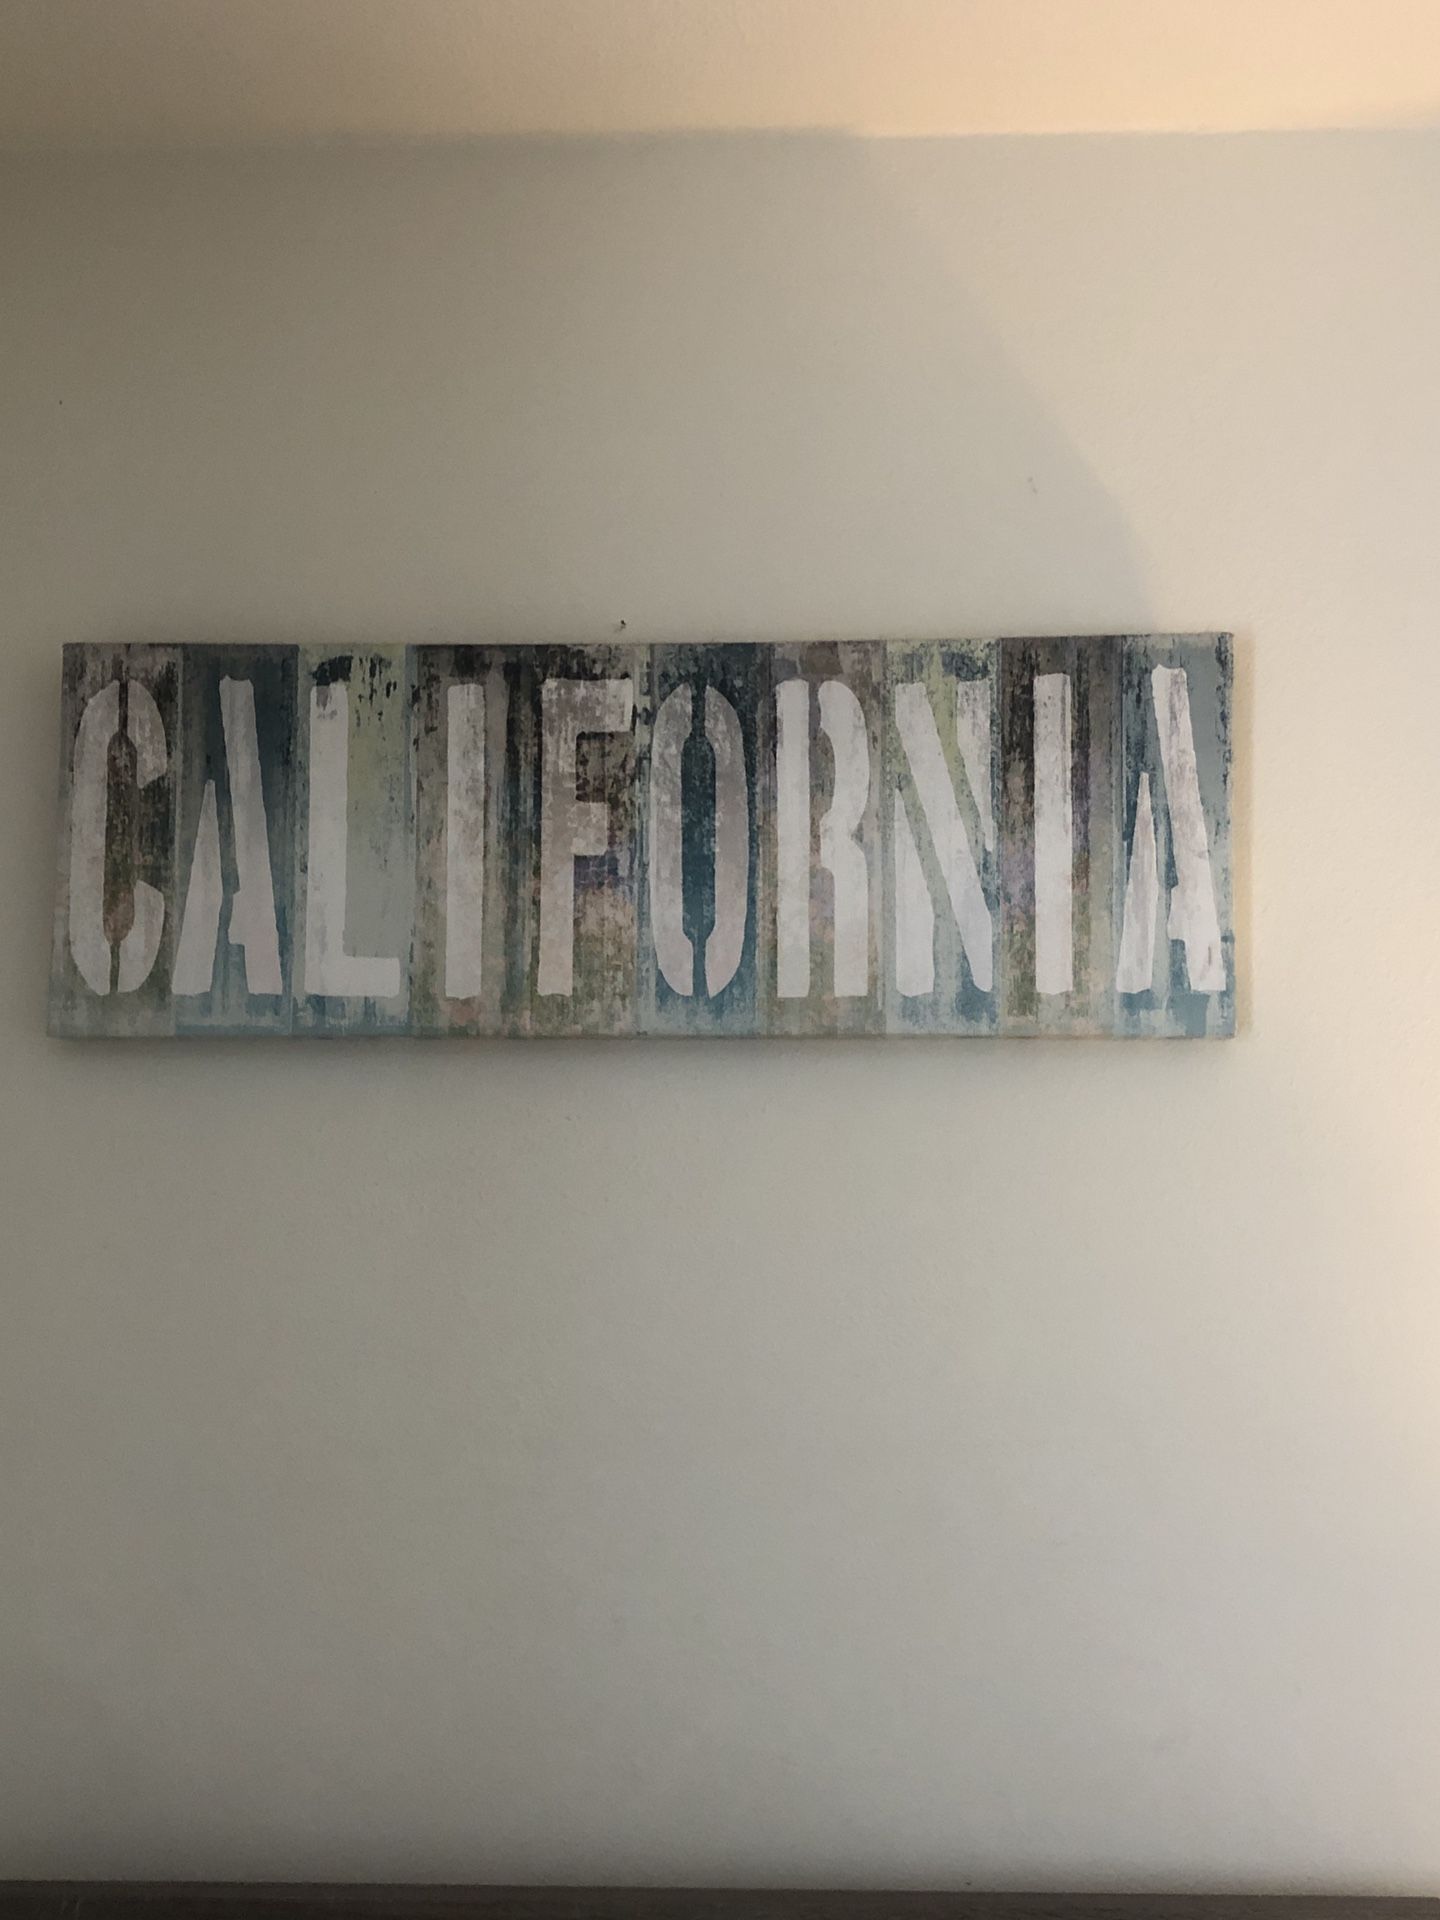 California wall decor